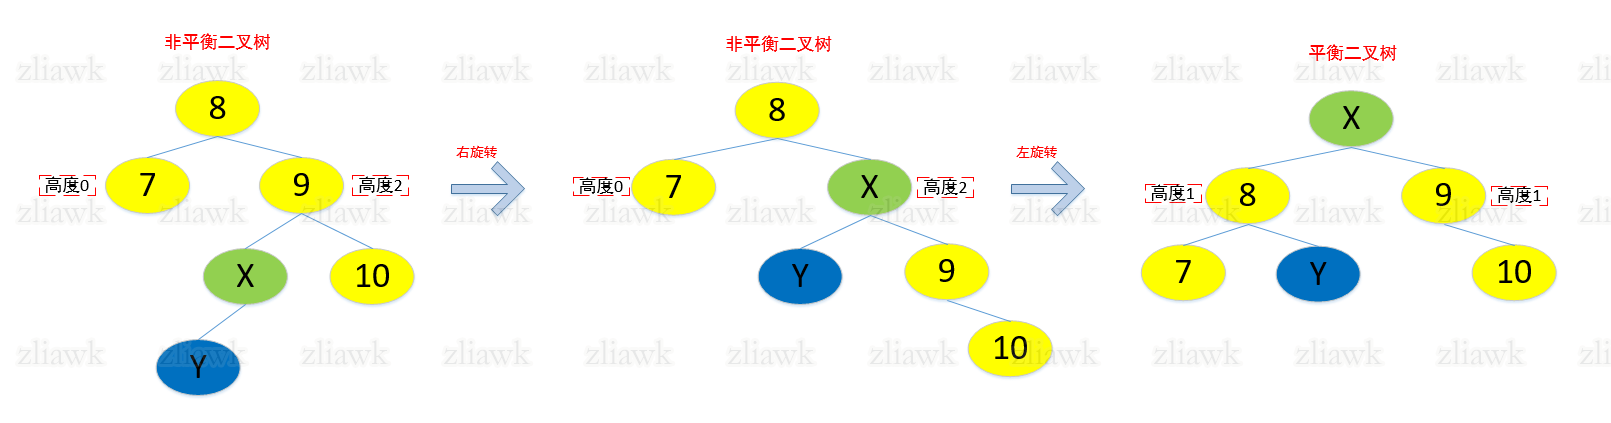 avl平衡二叉树结构-5